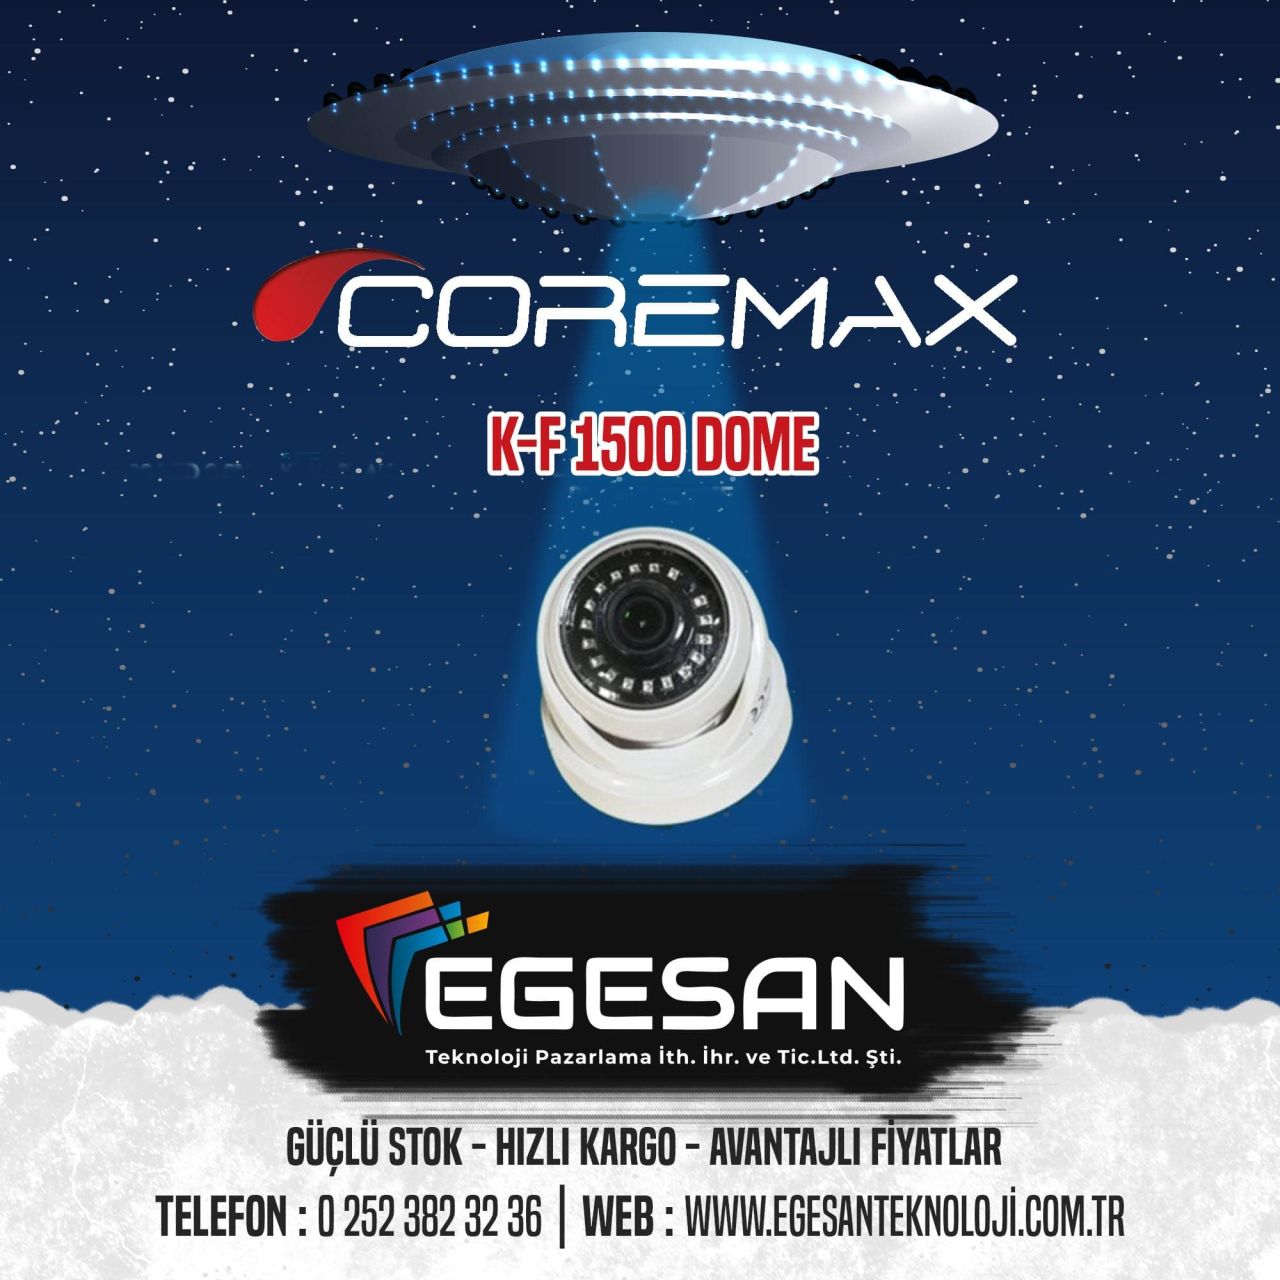 Coremax K-F 1500 2.0mp Dome Güvenlik Kamerası